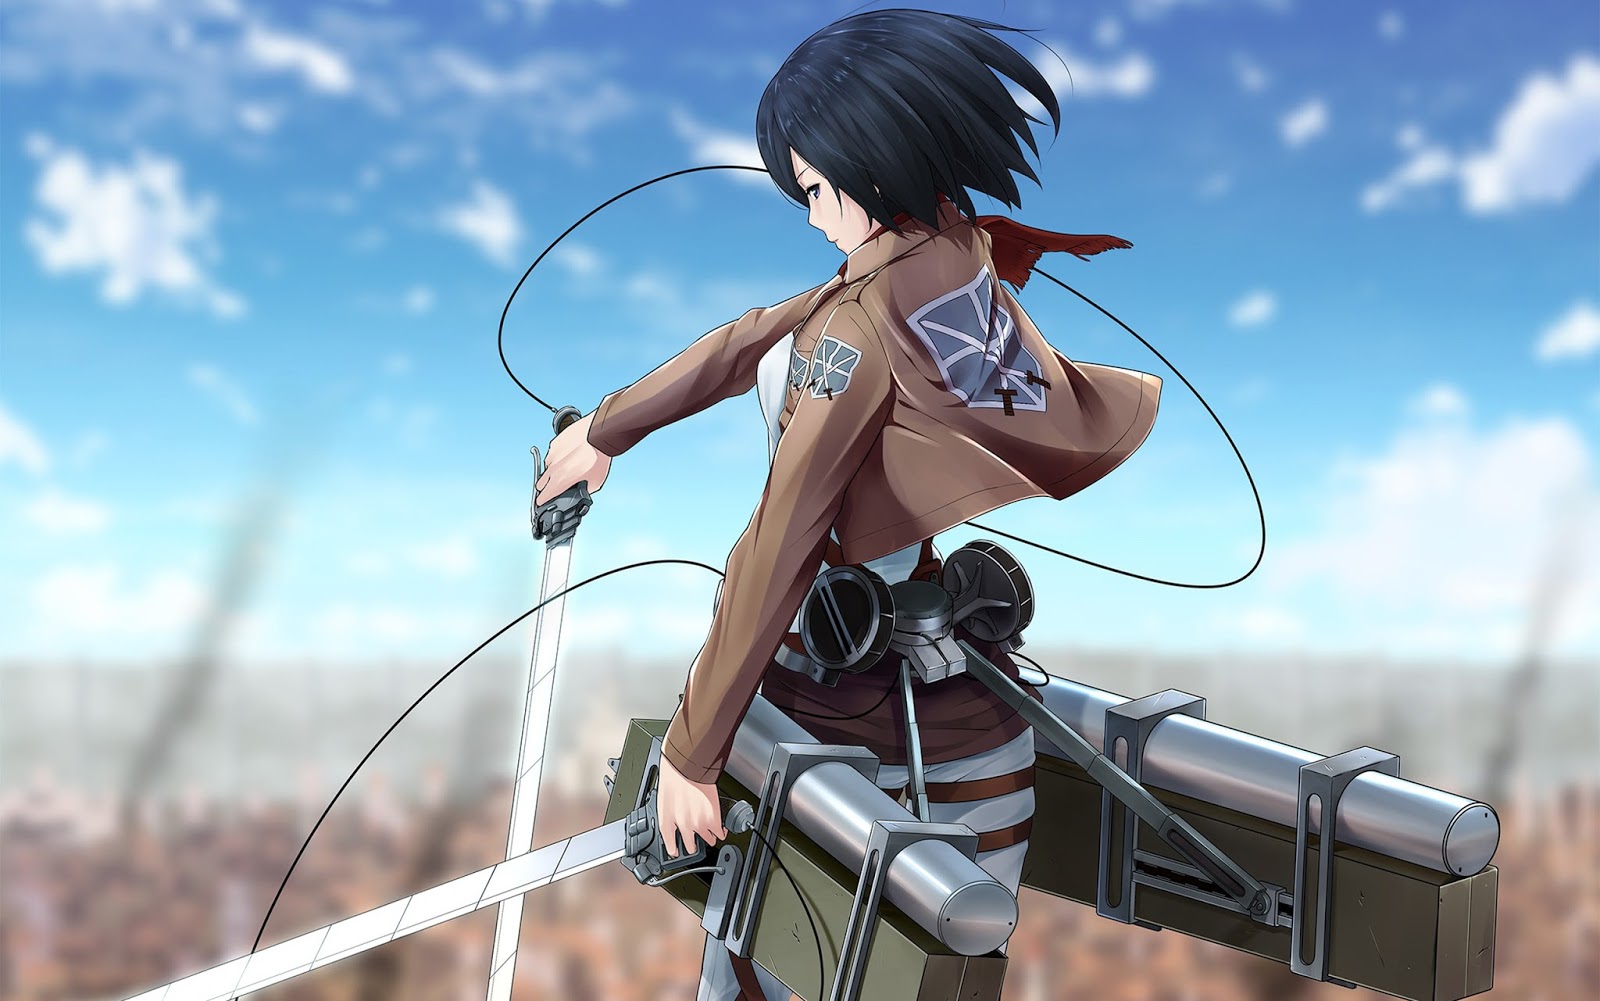  Kyojin Anime Girl Weapon 3D Maneuver Gear HD Wallpaper Backgrounds f6